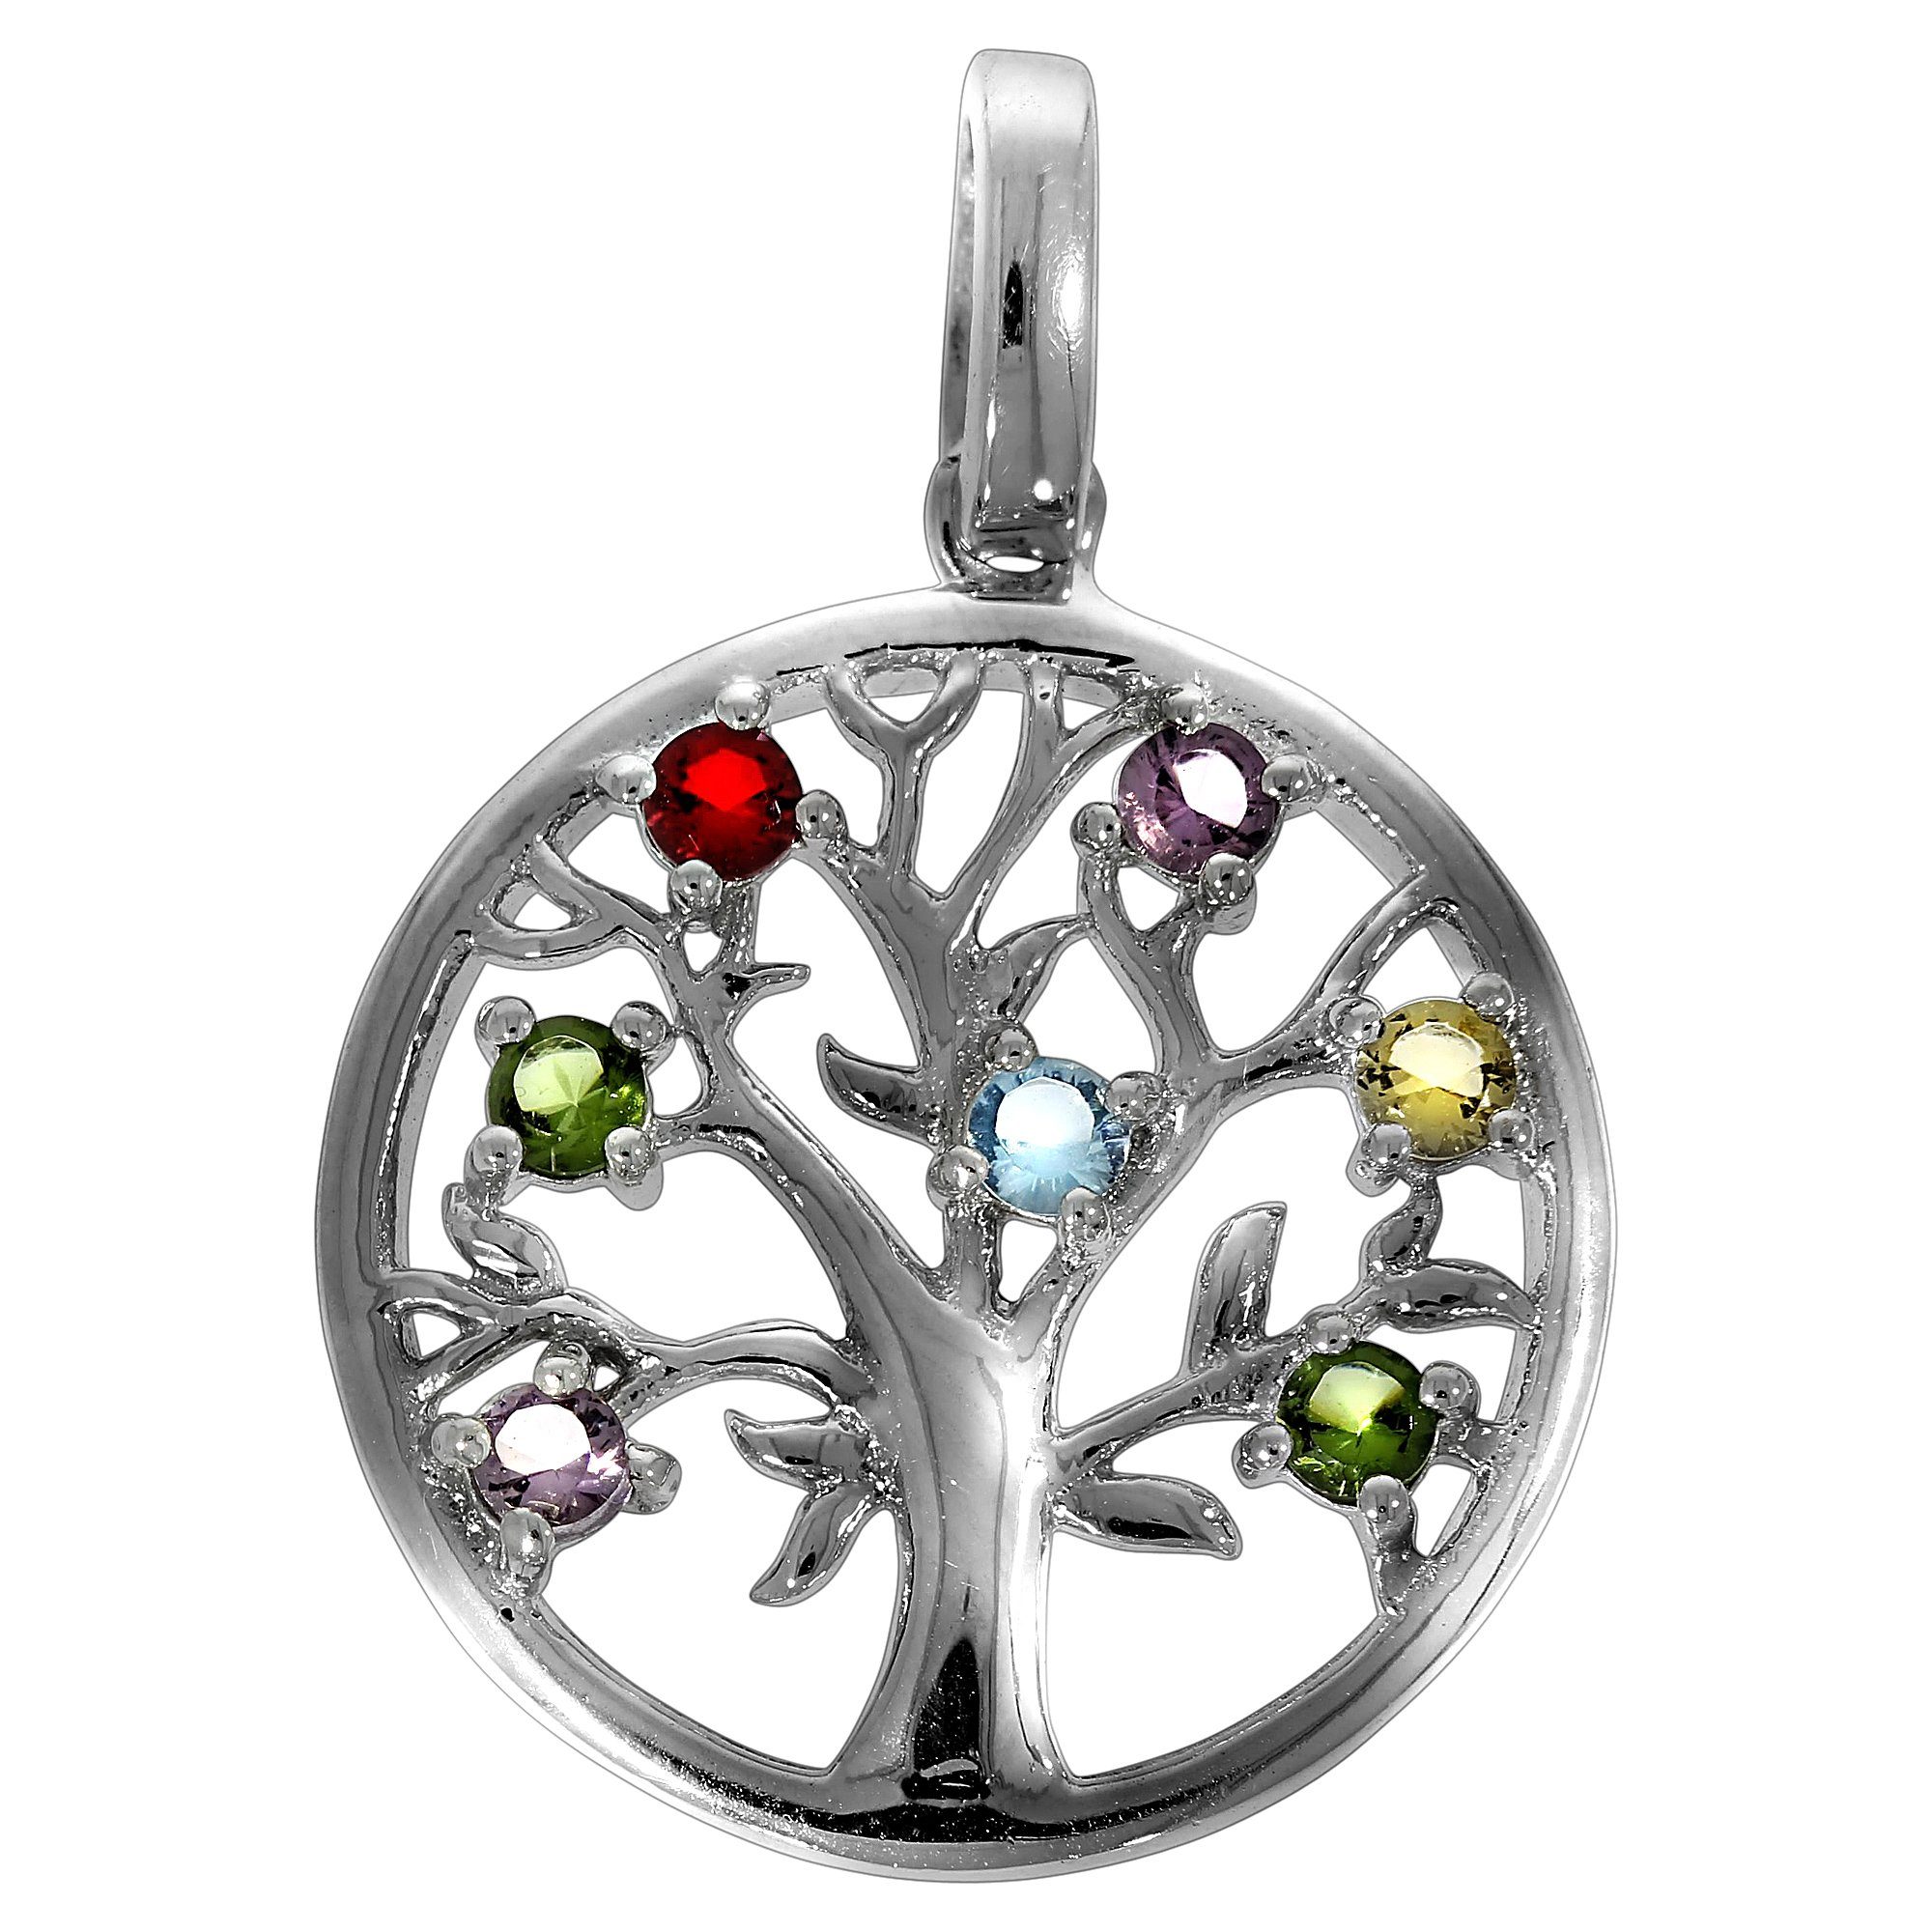 Vivance Kettenanhänger 925 Hochwertig aus edlen Lebensbaum, Silber rhodiniert Sterling Materialien gefertigt